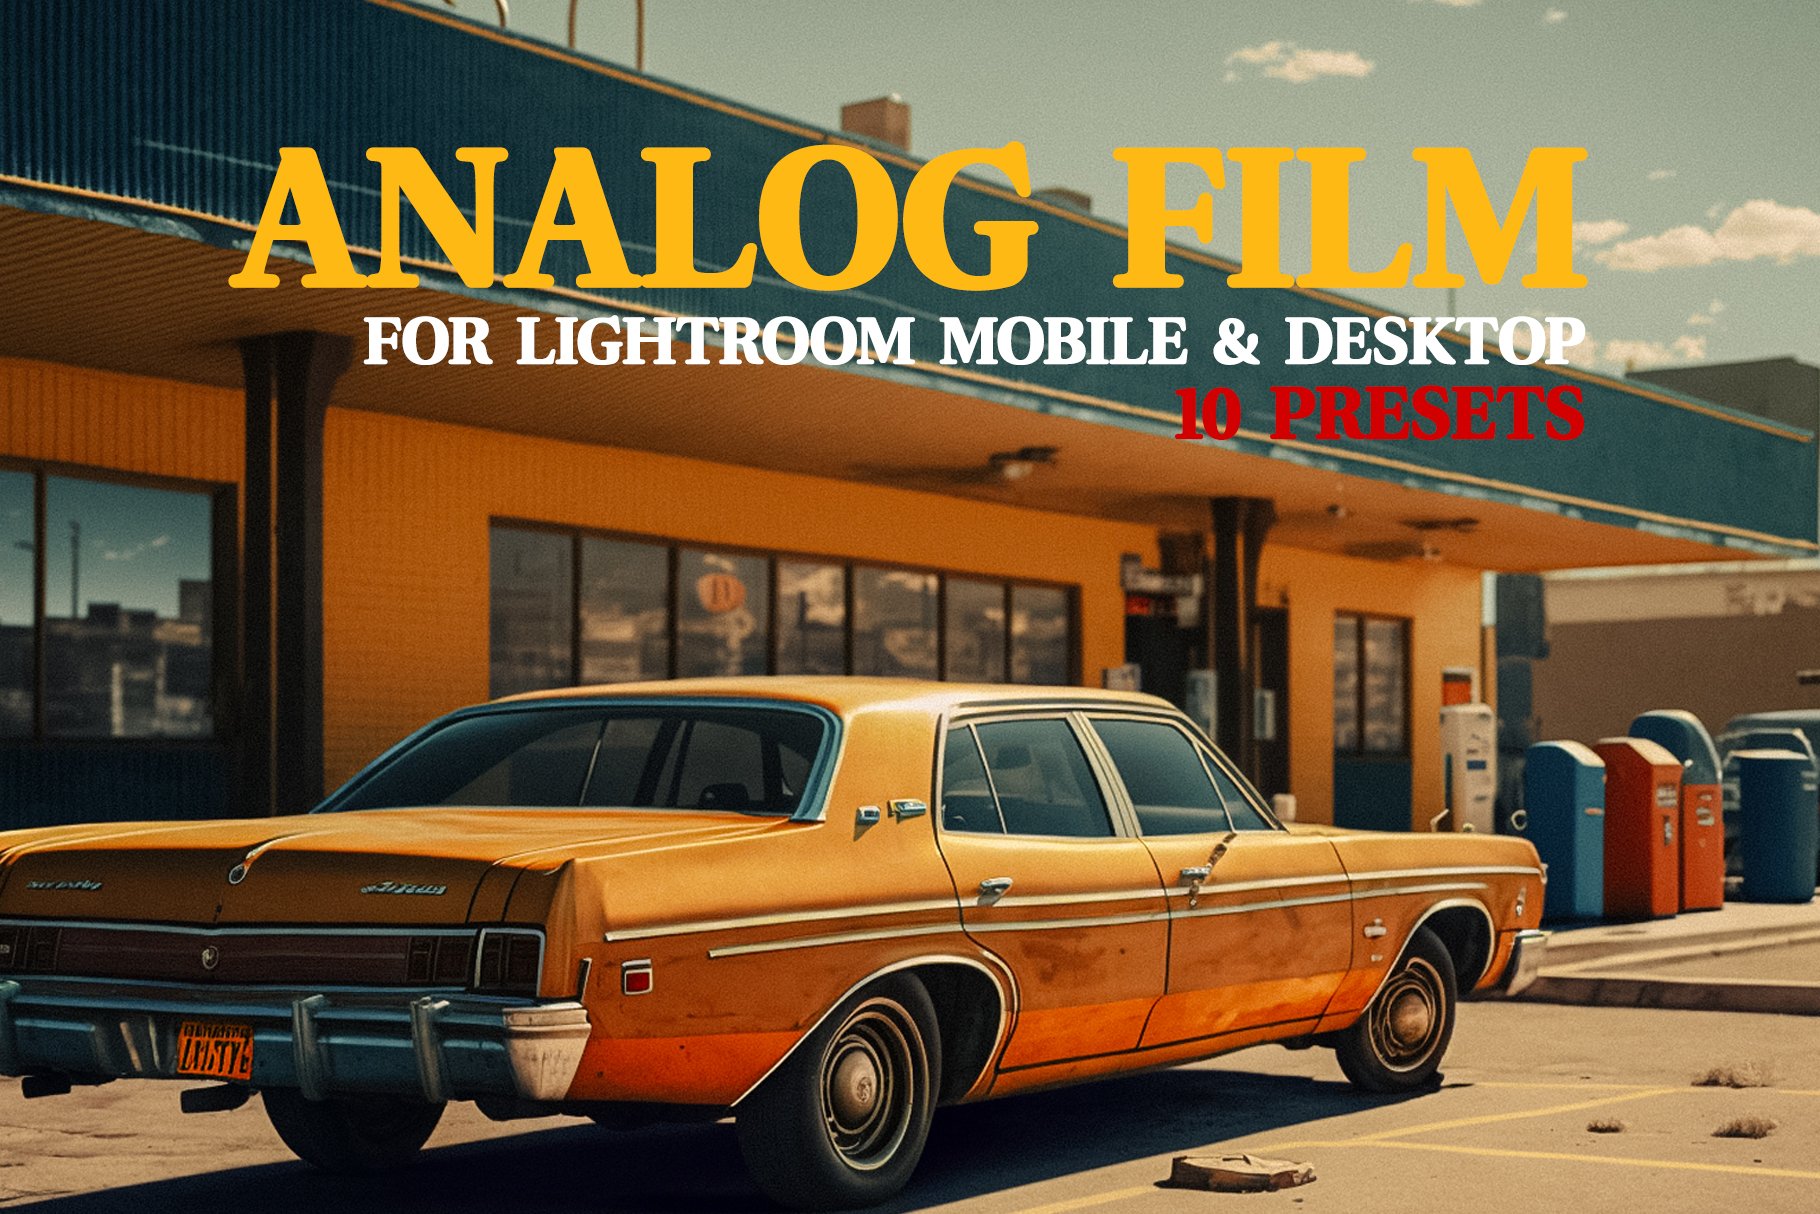 10 ANALOG FILM FOR LIGHTROOMcover image.